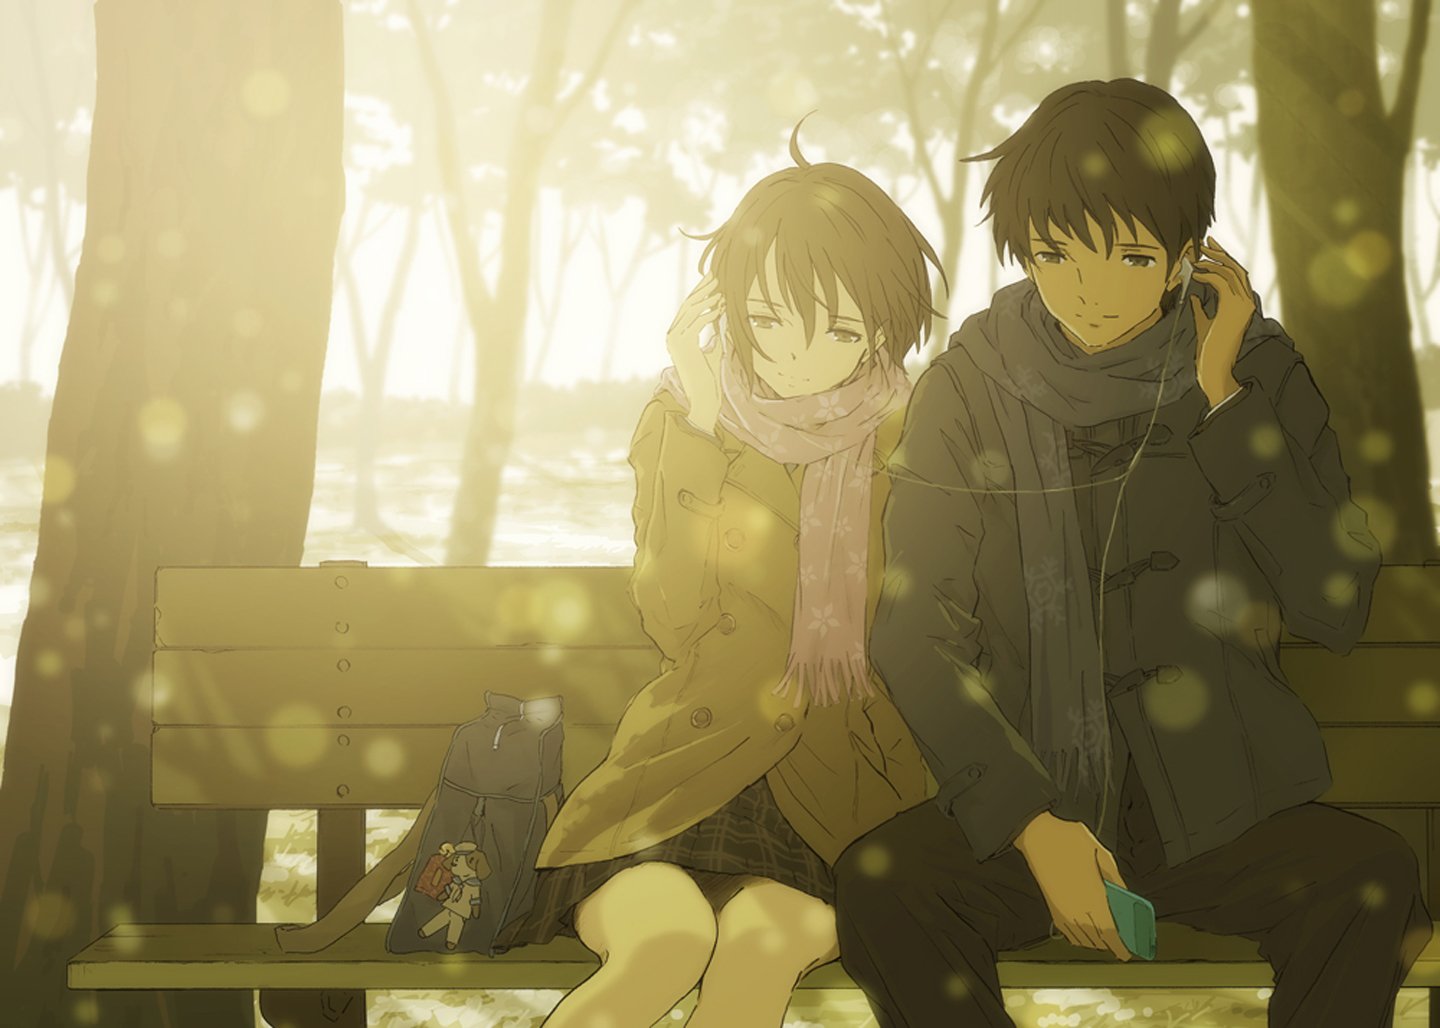 Anime love couple music headphone tree winter sunshine romantic wallpapers hd desktop and mobile backgrounds